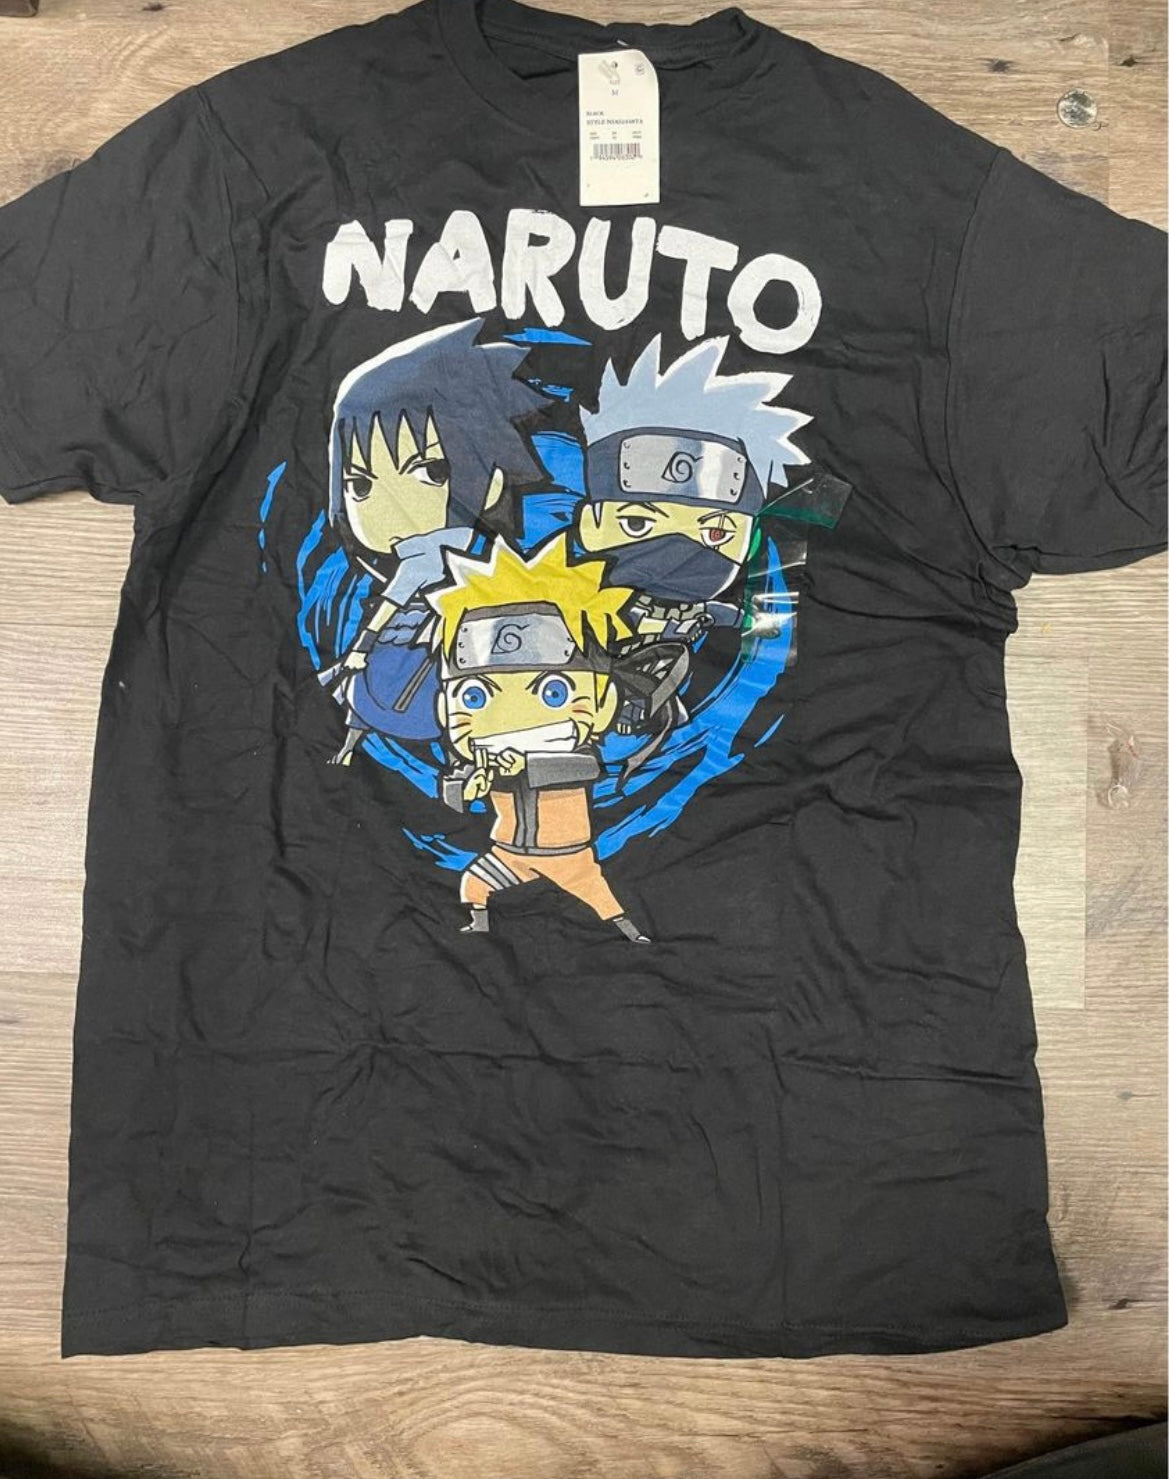 New Mens Medium Naruto T shirt